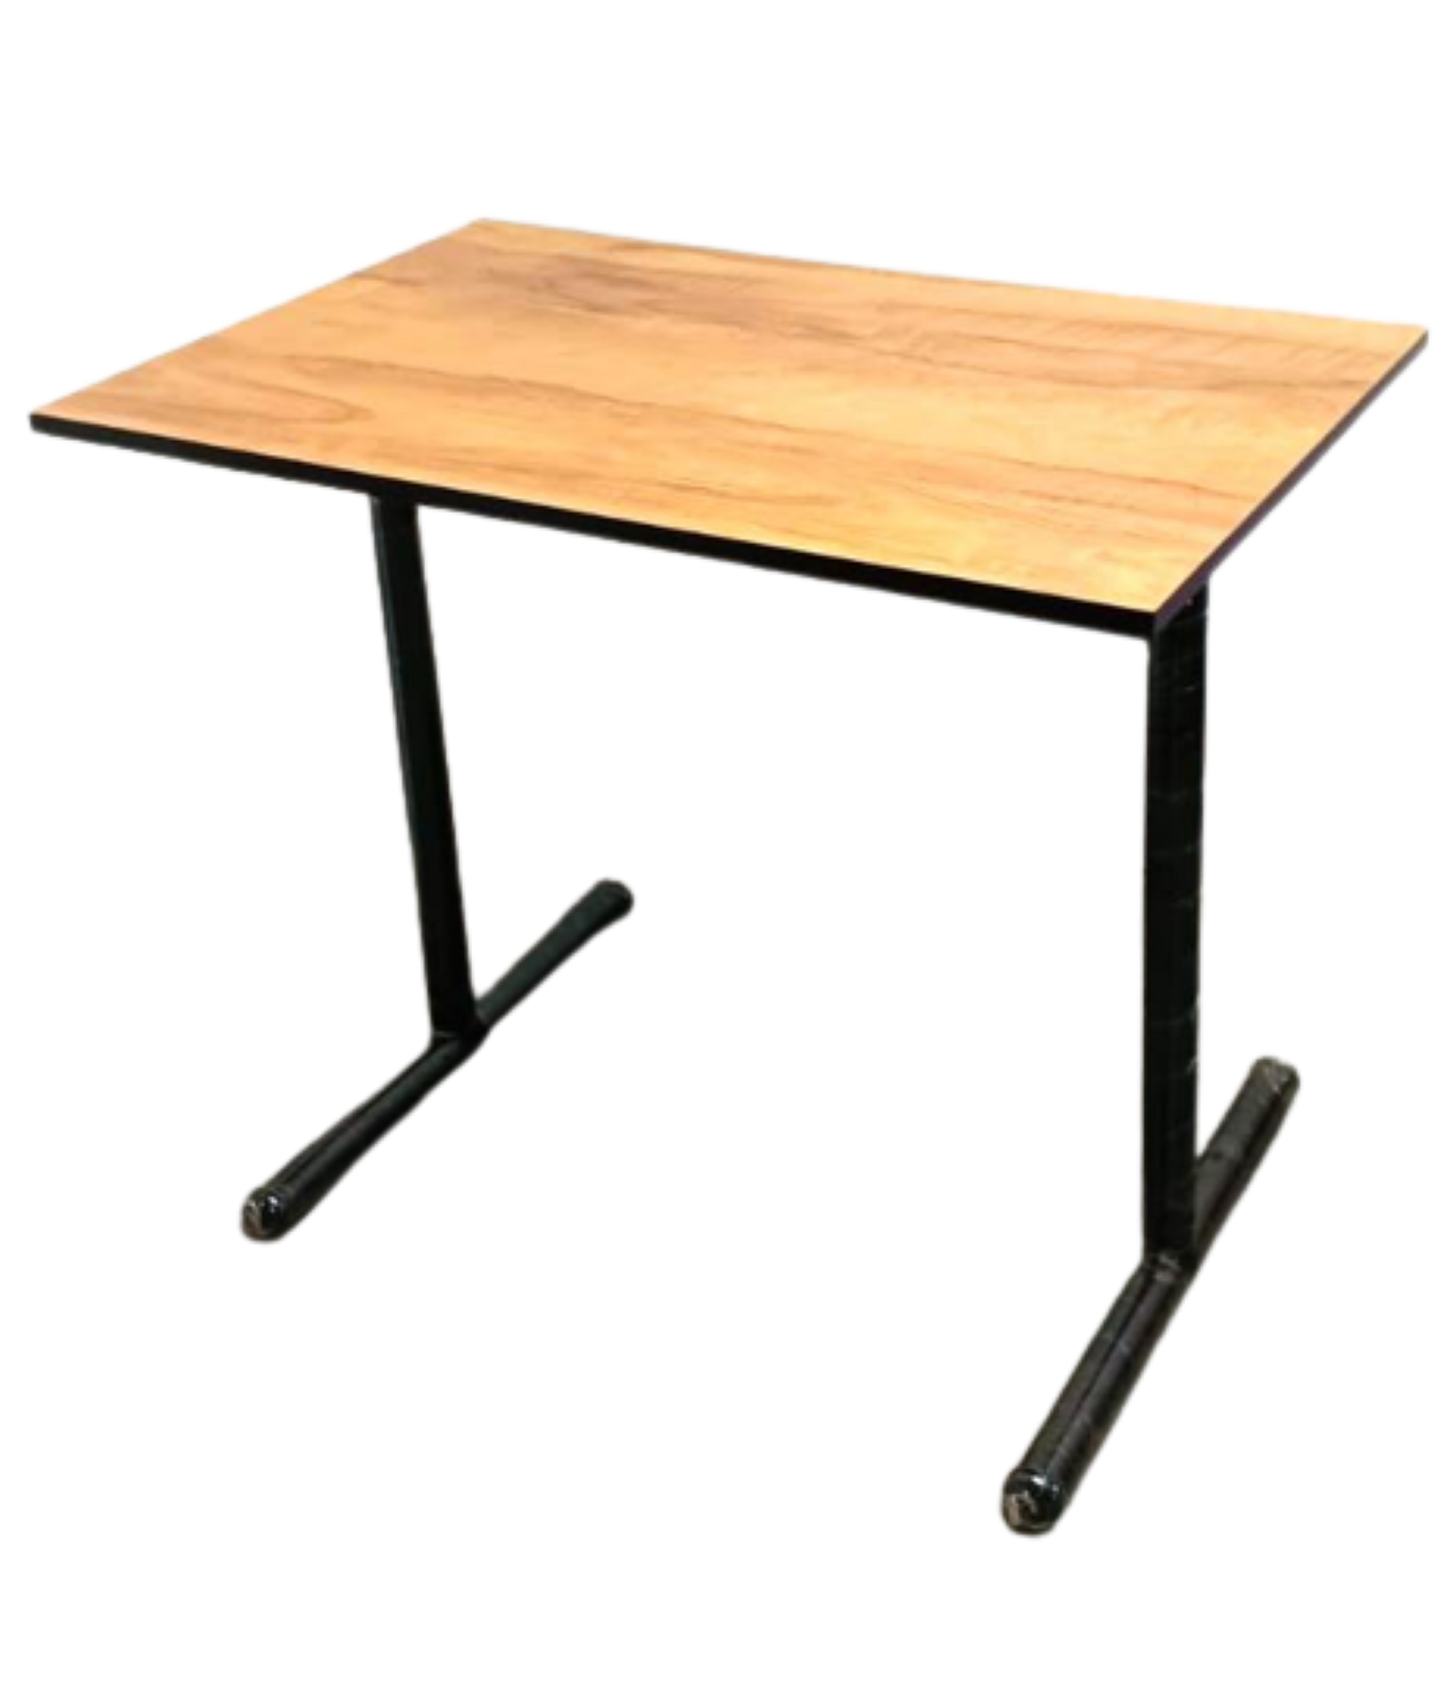 Bowzar Computer Desk 3X2 Feet Table